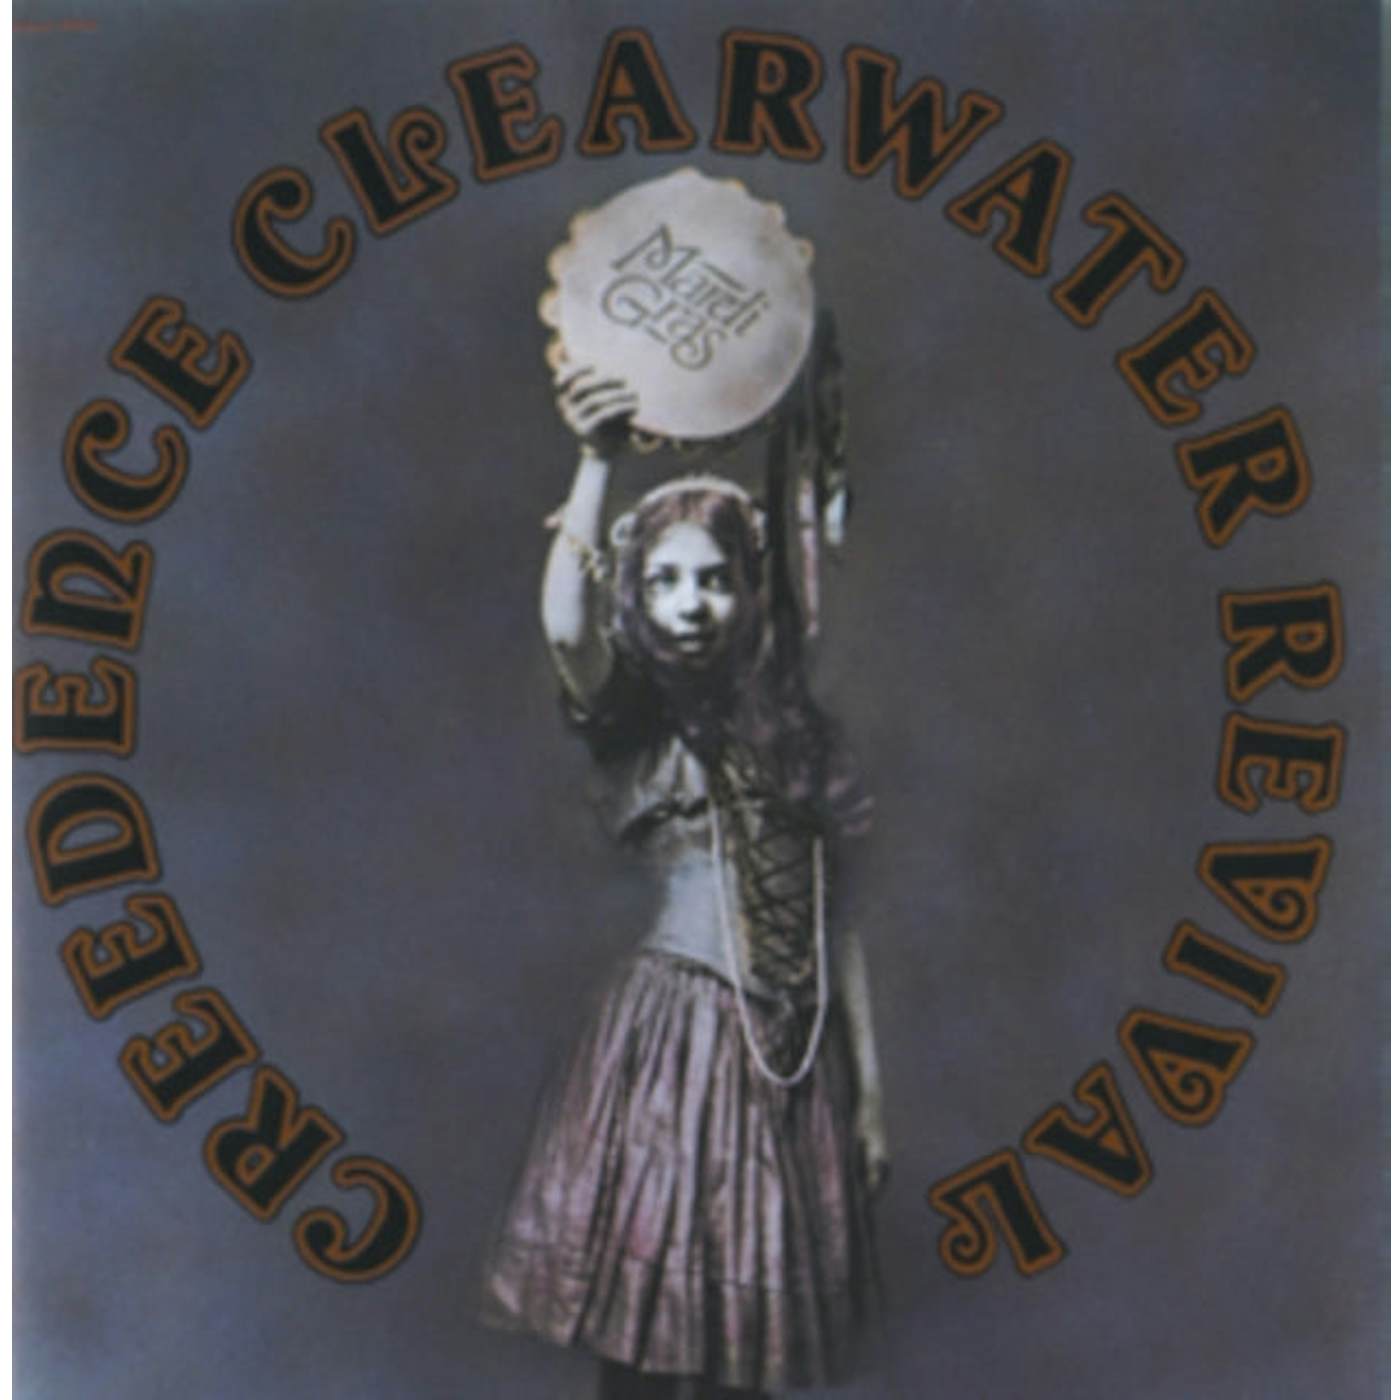 Creedence Clearwater Revival CD - Mardi Gras